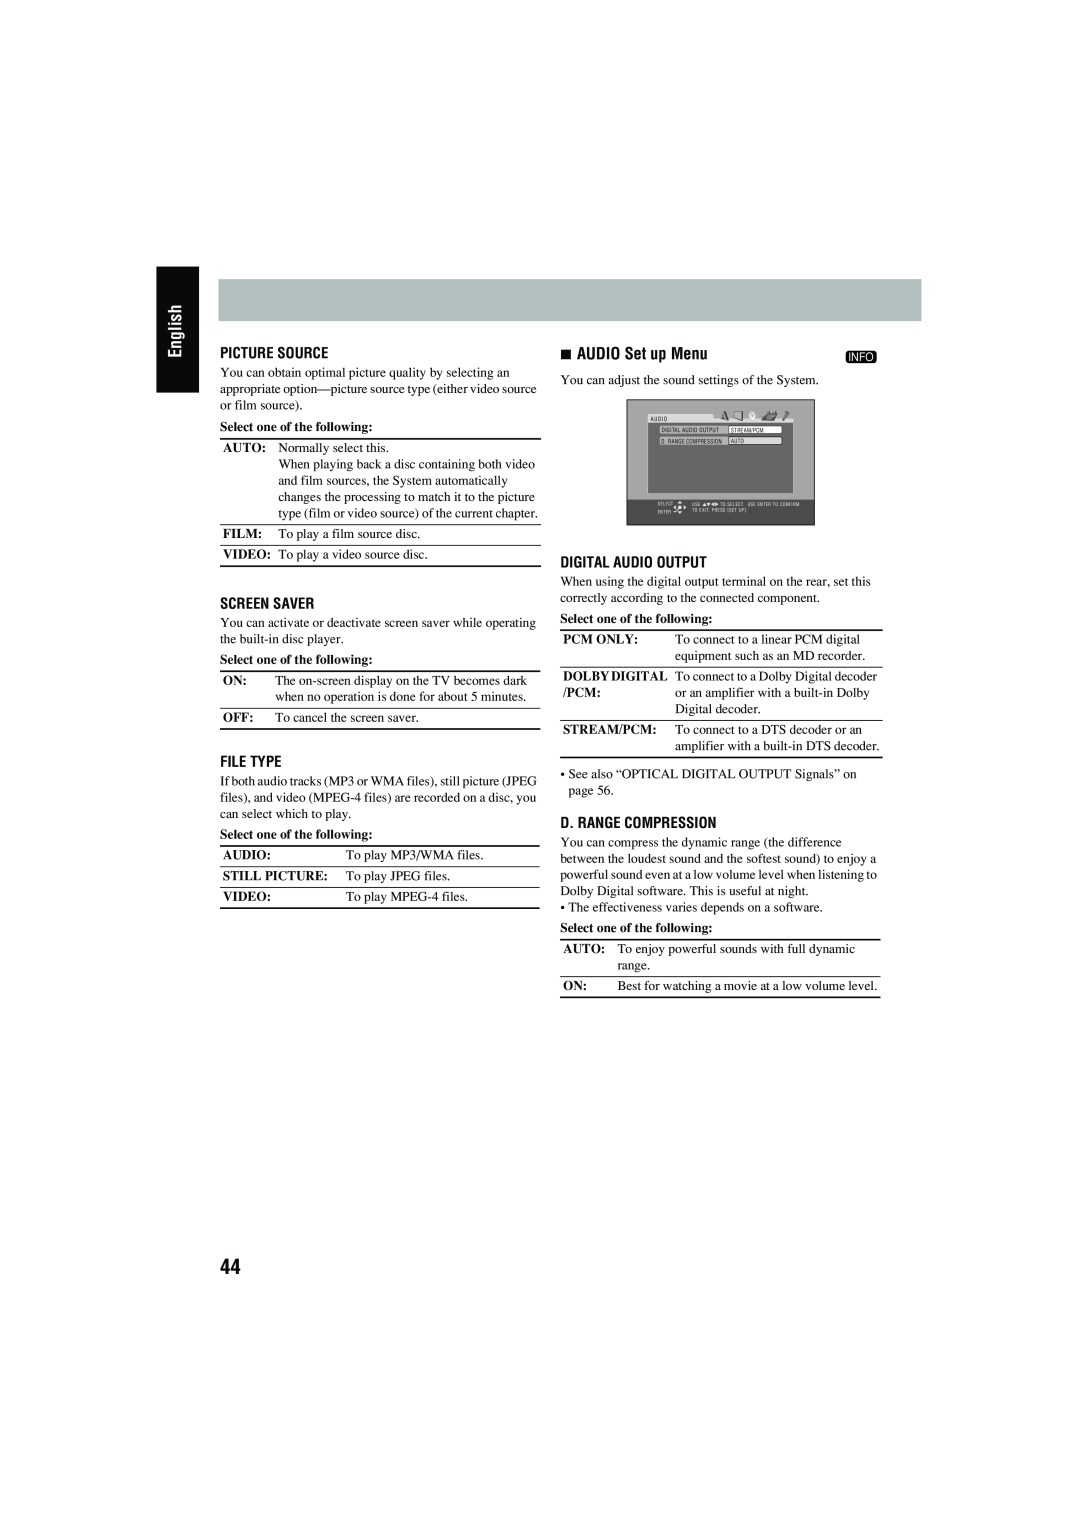 JVC CA-MXJD8 manual English, AUDIO Set up Menu, Picture Source, Screen Saver, File Type, Digital Audio Output, Video 